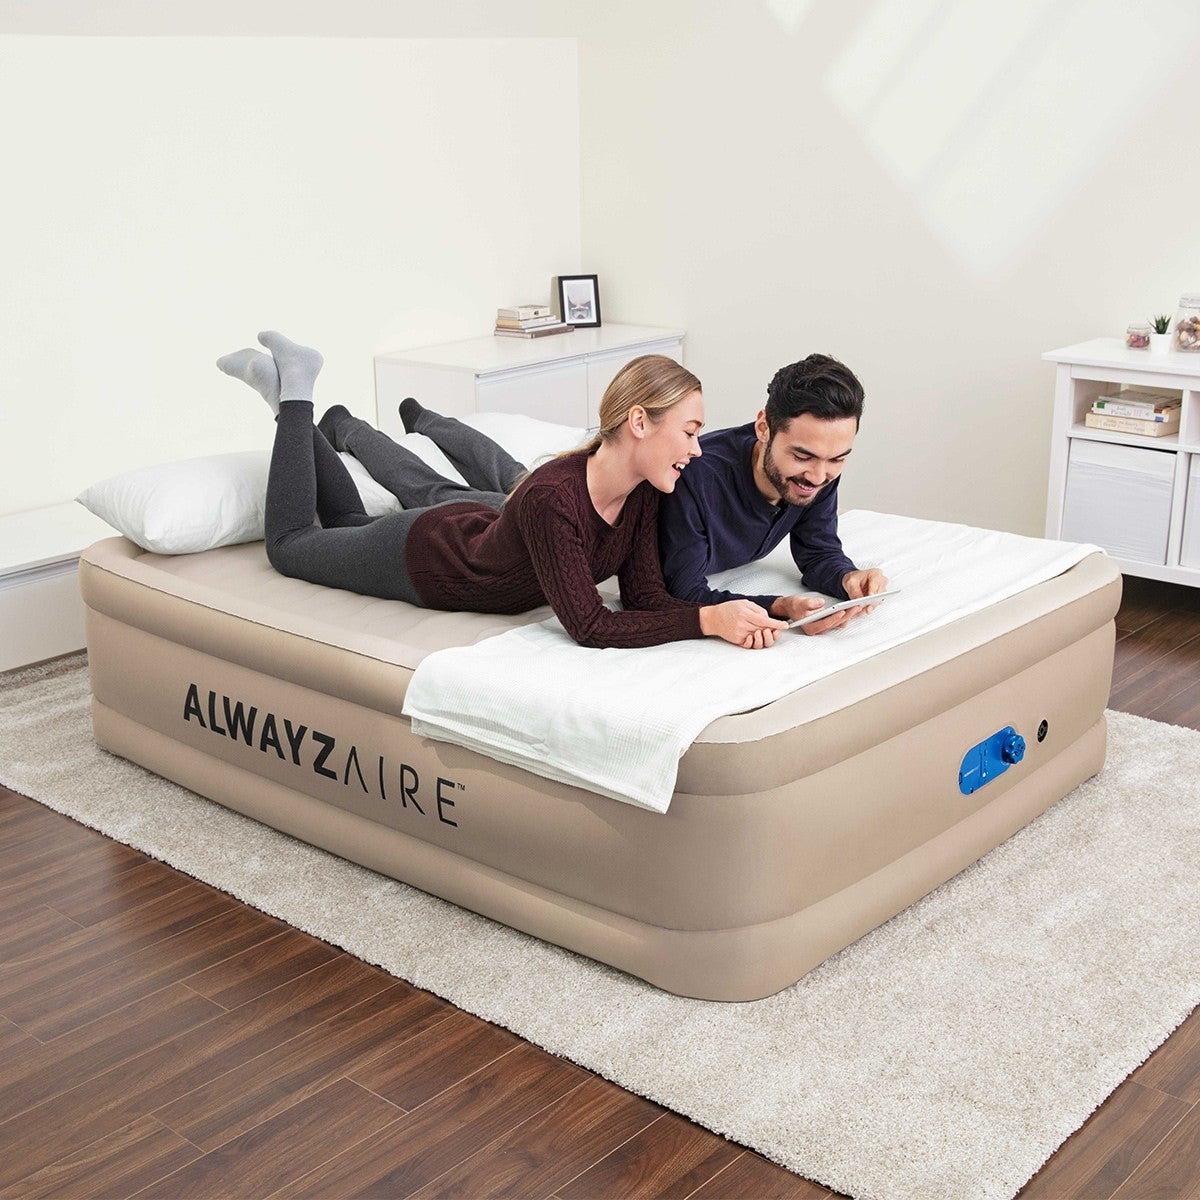 Modern Floating Mattress Bed for Simple Design